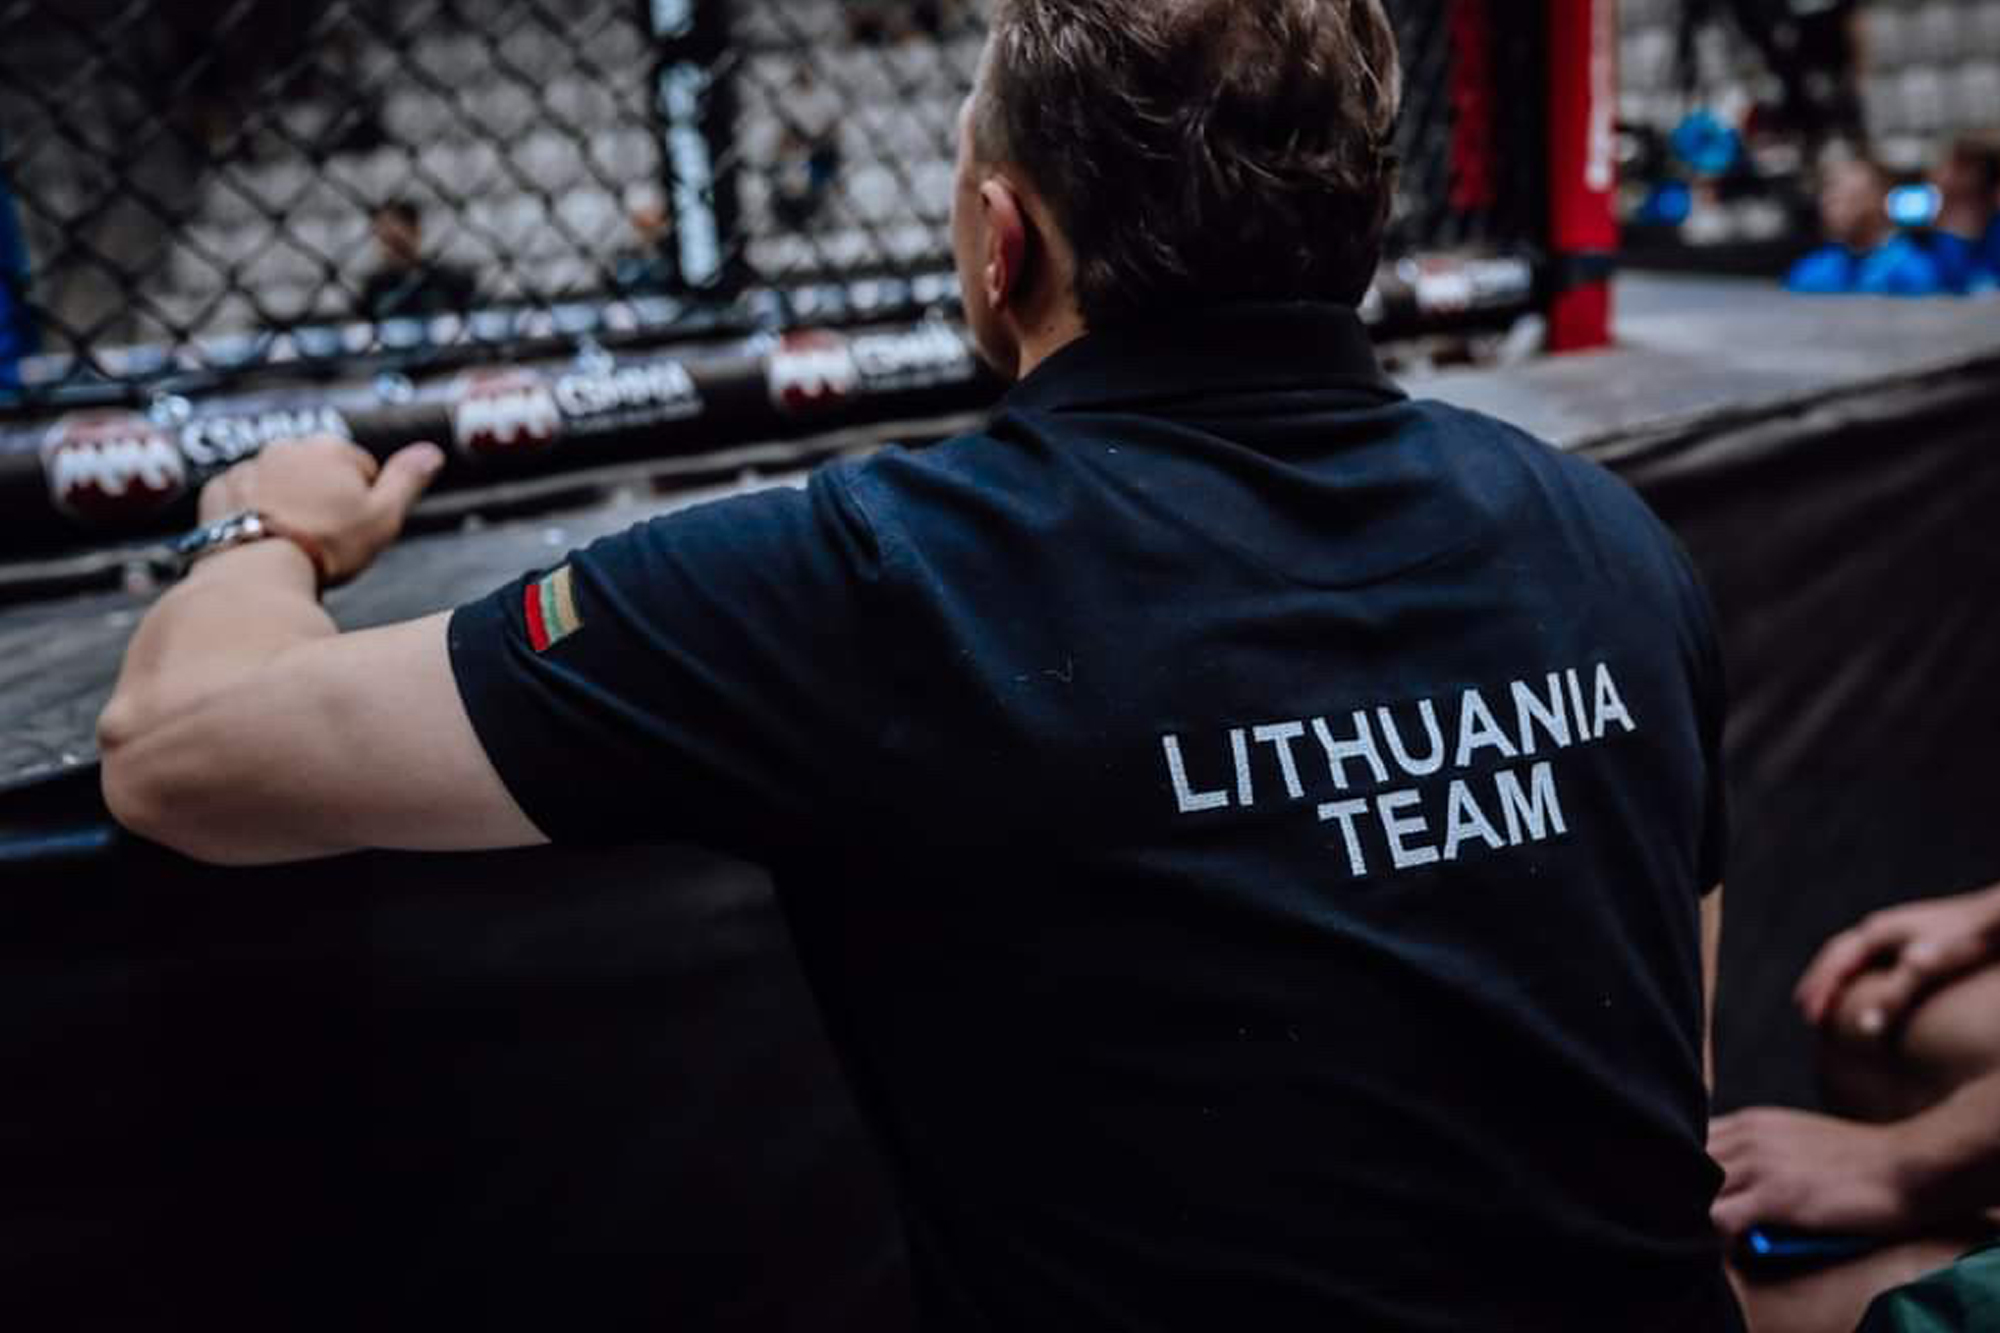 Lithuania’s team keen to make an impact in Abu Dhabi